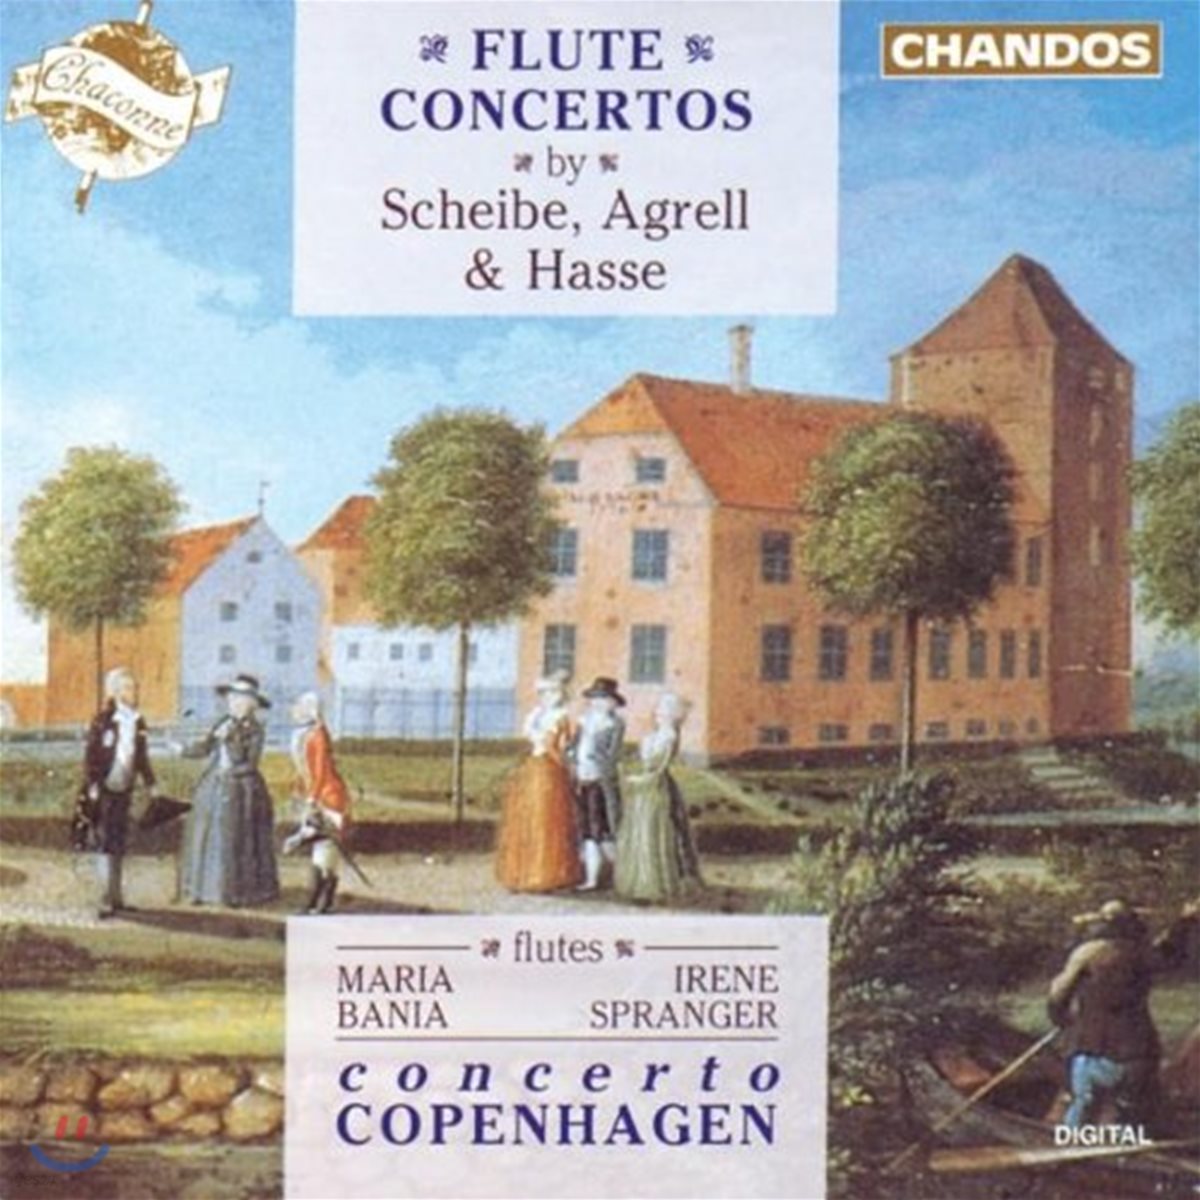 Maria Bania / Irene Spranger 아그렐 / 샤이베 / 하세: 플루트 협주곡 (Agrell / Scheibe / Hasse: Flute Concerto)